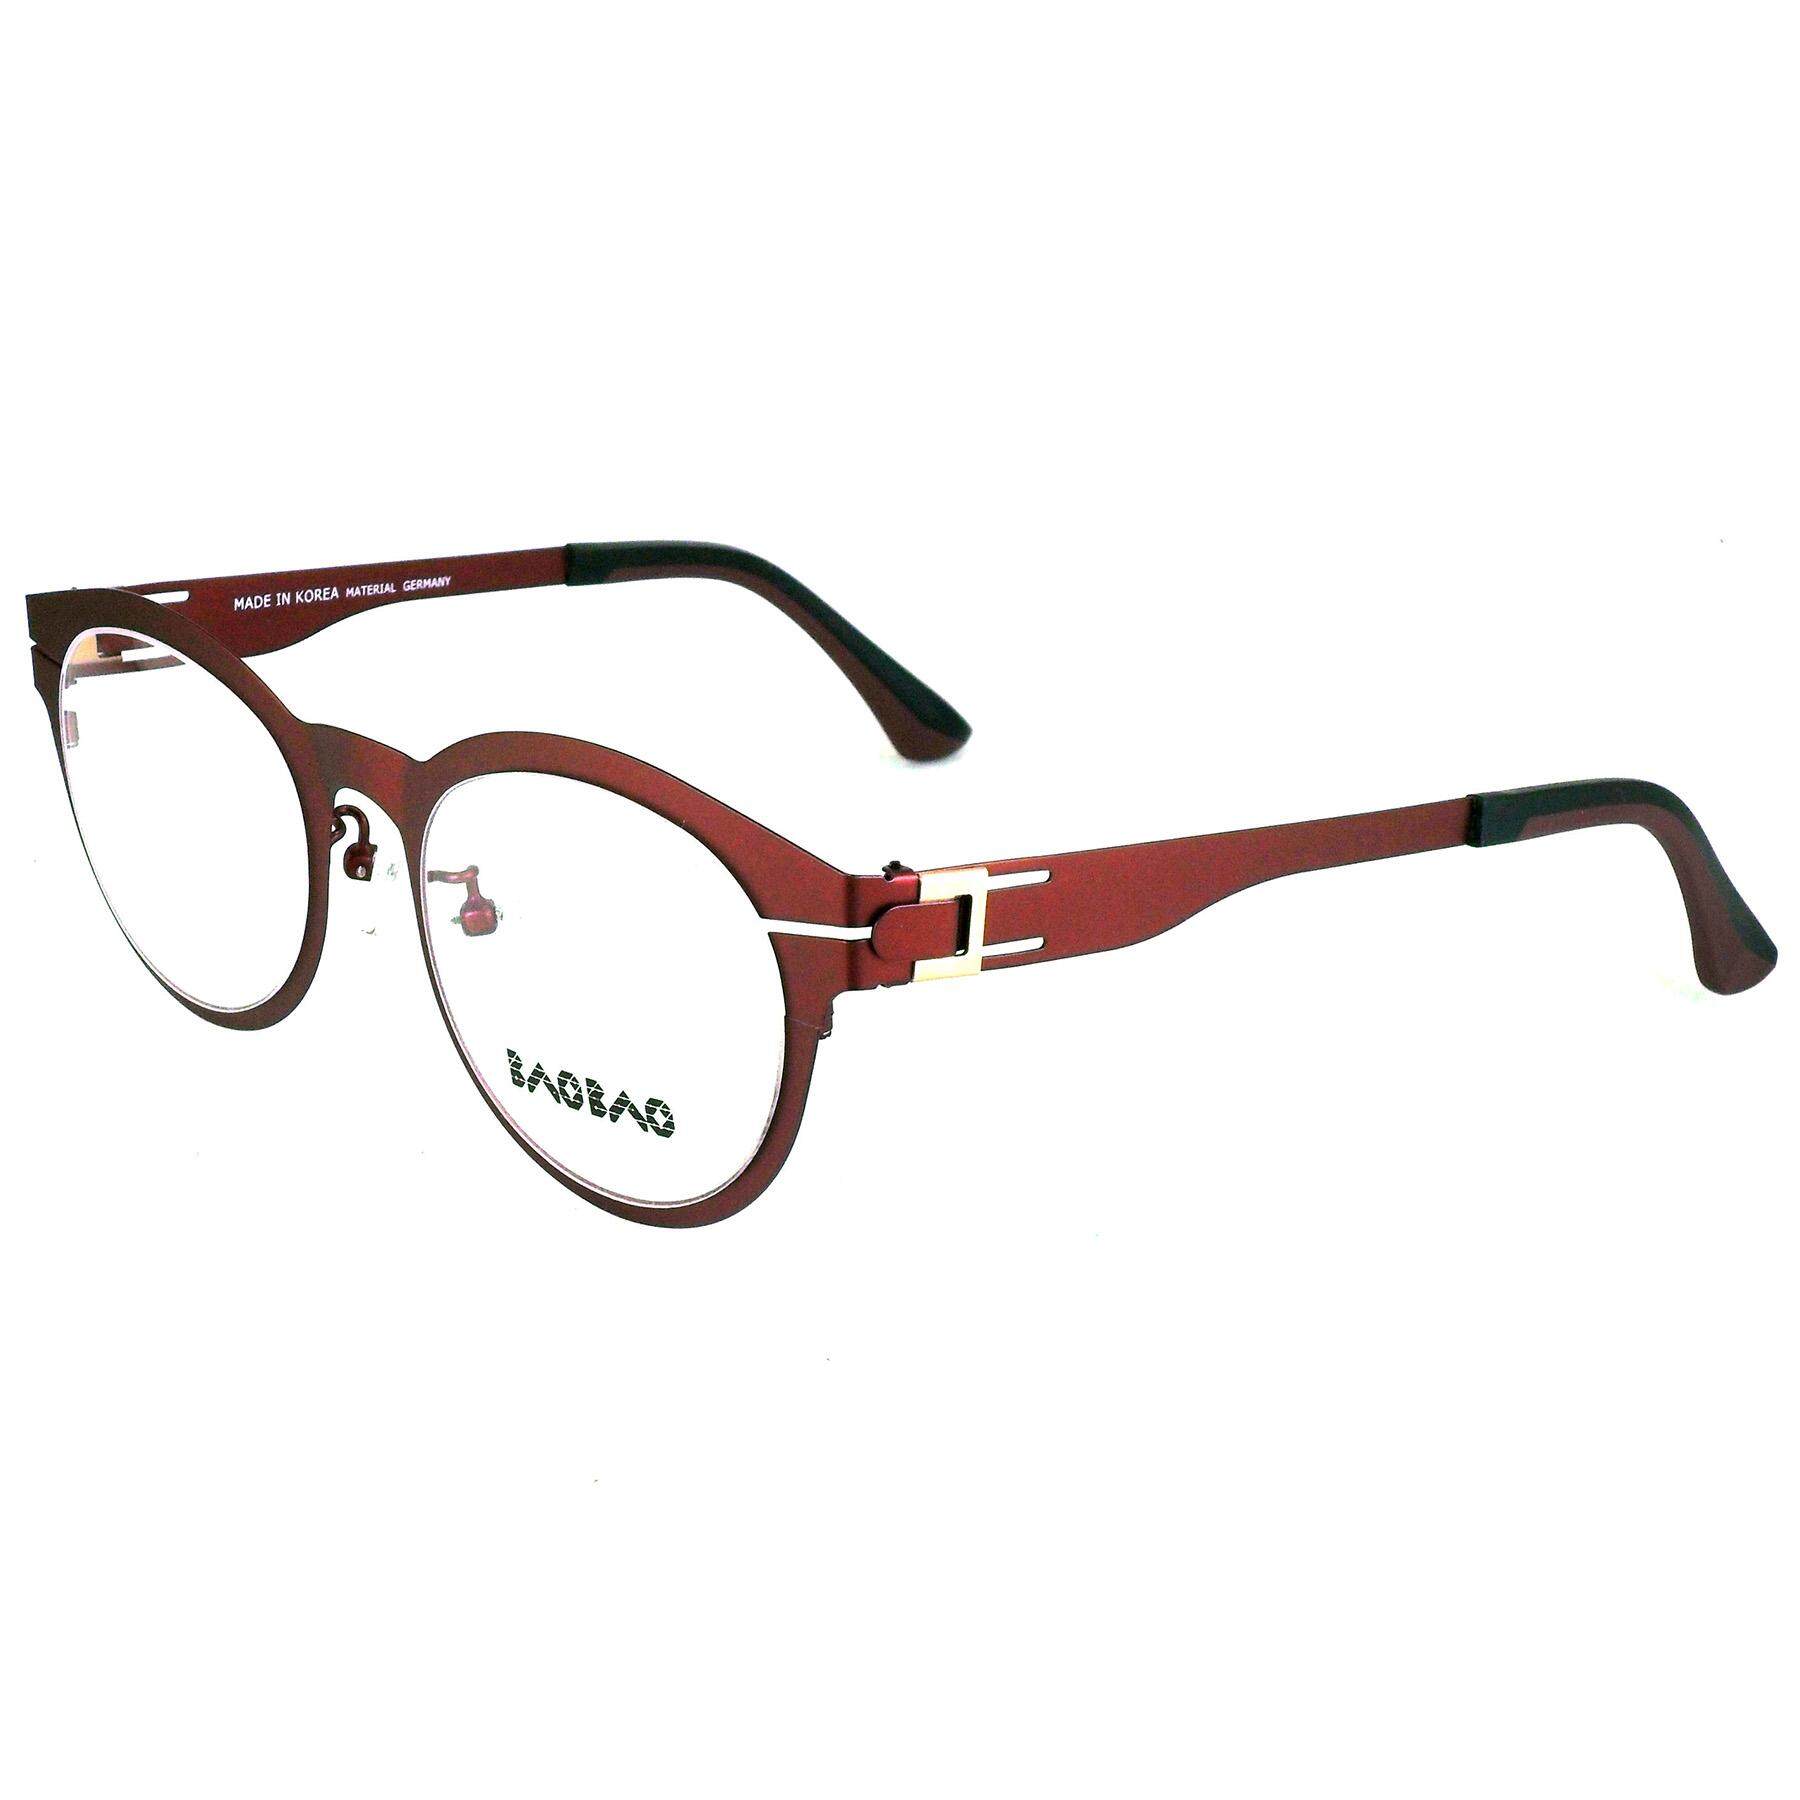 Fashion แว่นตา ไม่ใช้น็อต รุ่น 8182 กรอบแว่นตา ( สำหรับตัดเลนส์ ) วัสดุ สแตนเลสสตีล หรือเหล็กกล้าไร้สนิม Stainless Steel เบามาก สวมใส่สบาย ขาข้อต่อ ไม่ใช้น็อต กรอบแว่นตา Eyewear Top Glasses